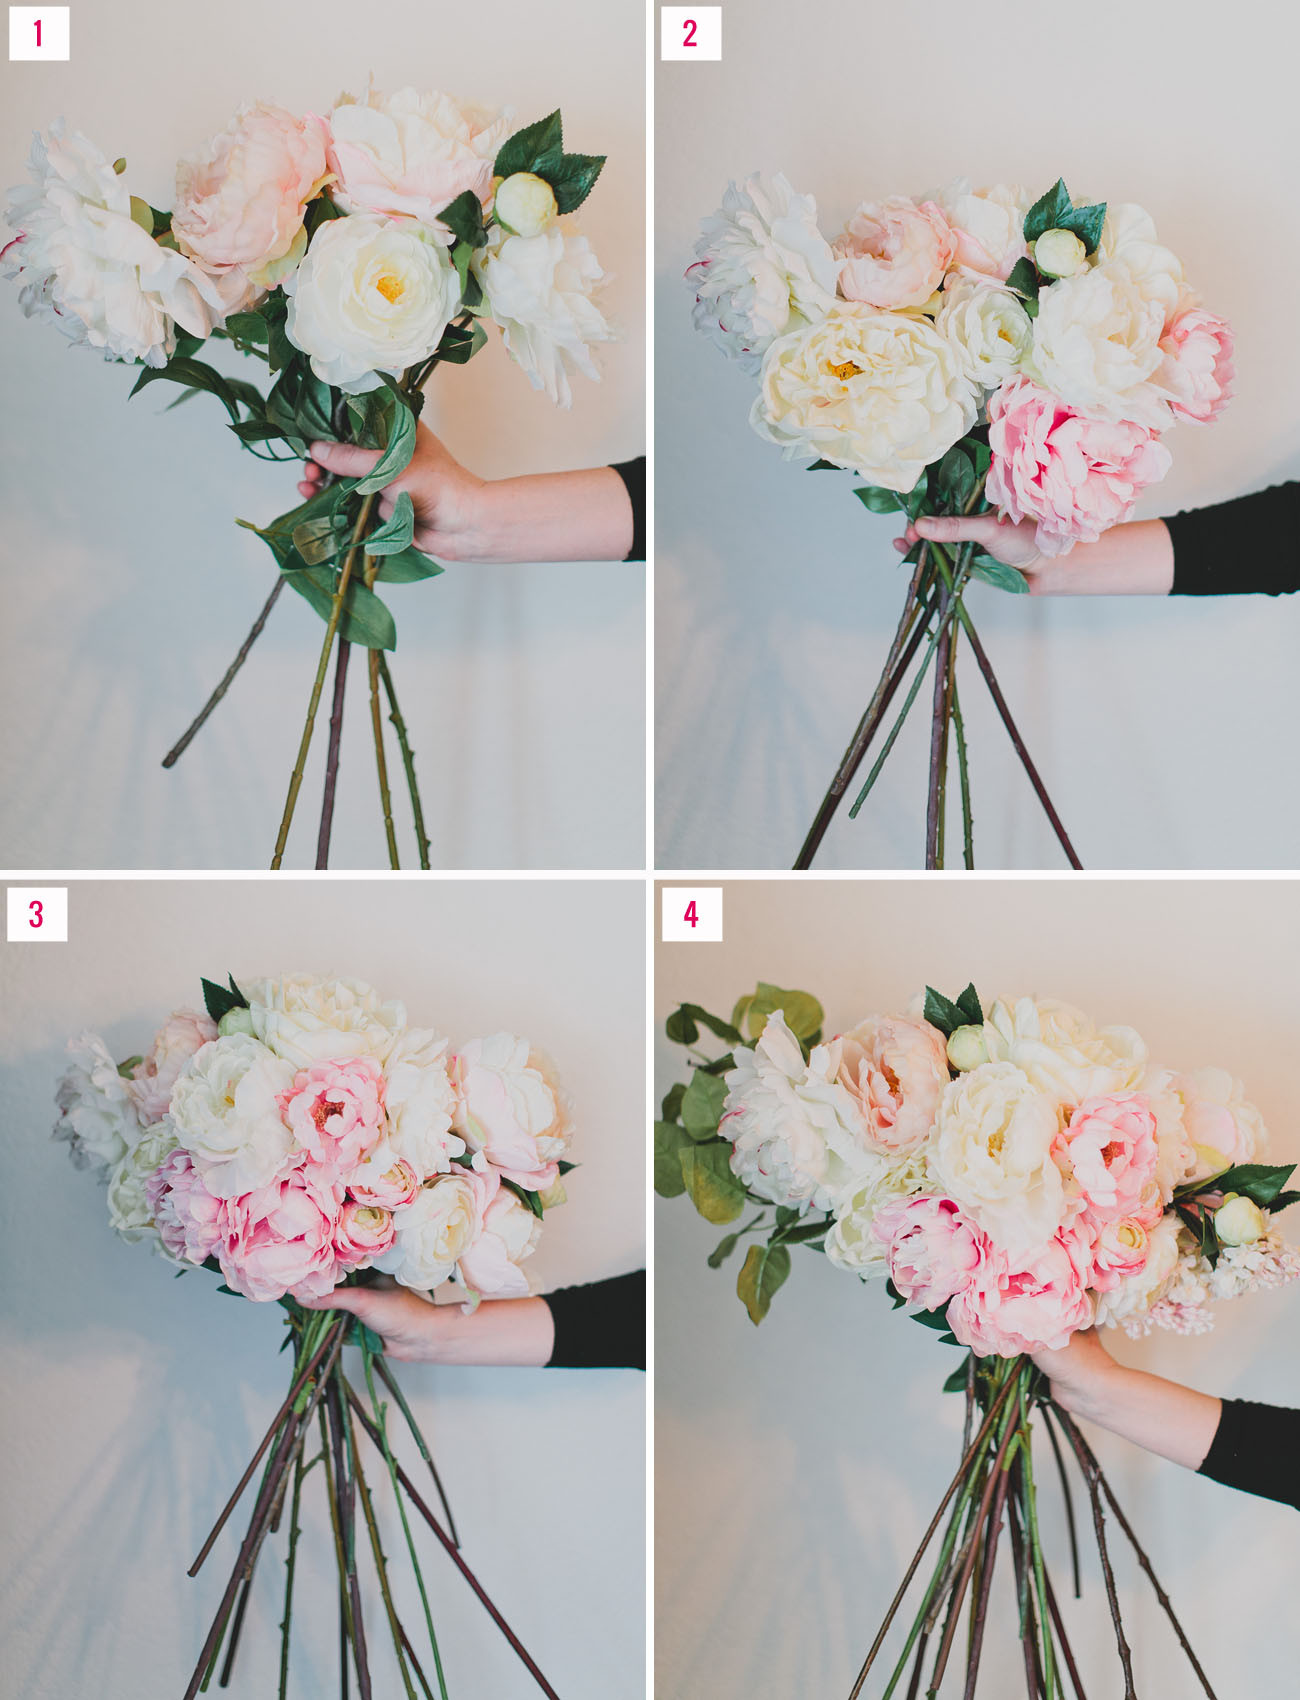 DIY Wedding Flower Arrangements
 DIY Silk Flower Bouquet with Afloral Green Wedding Shoes